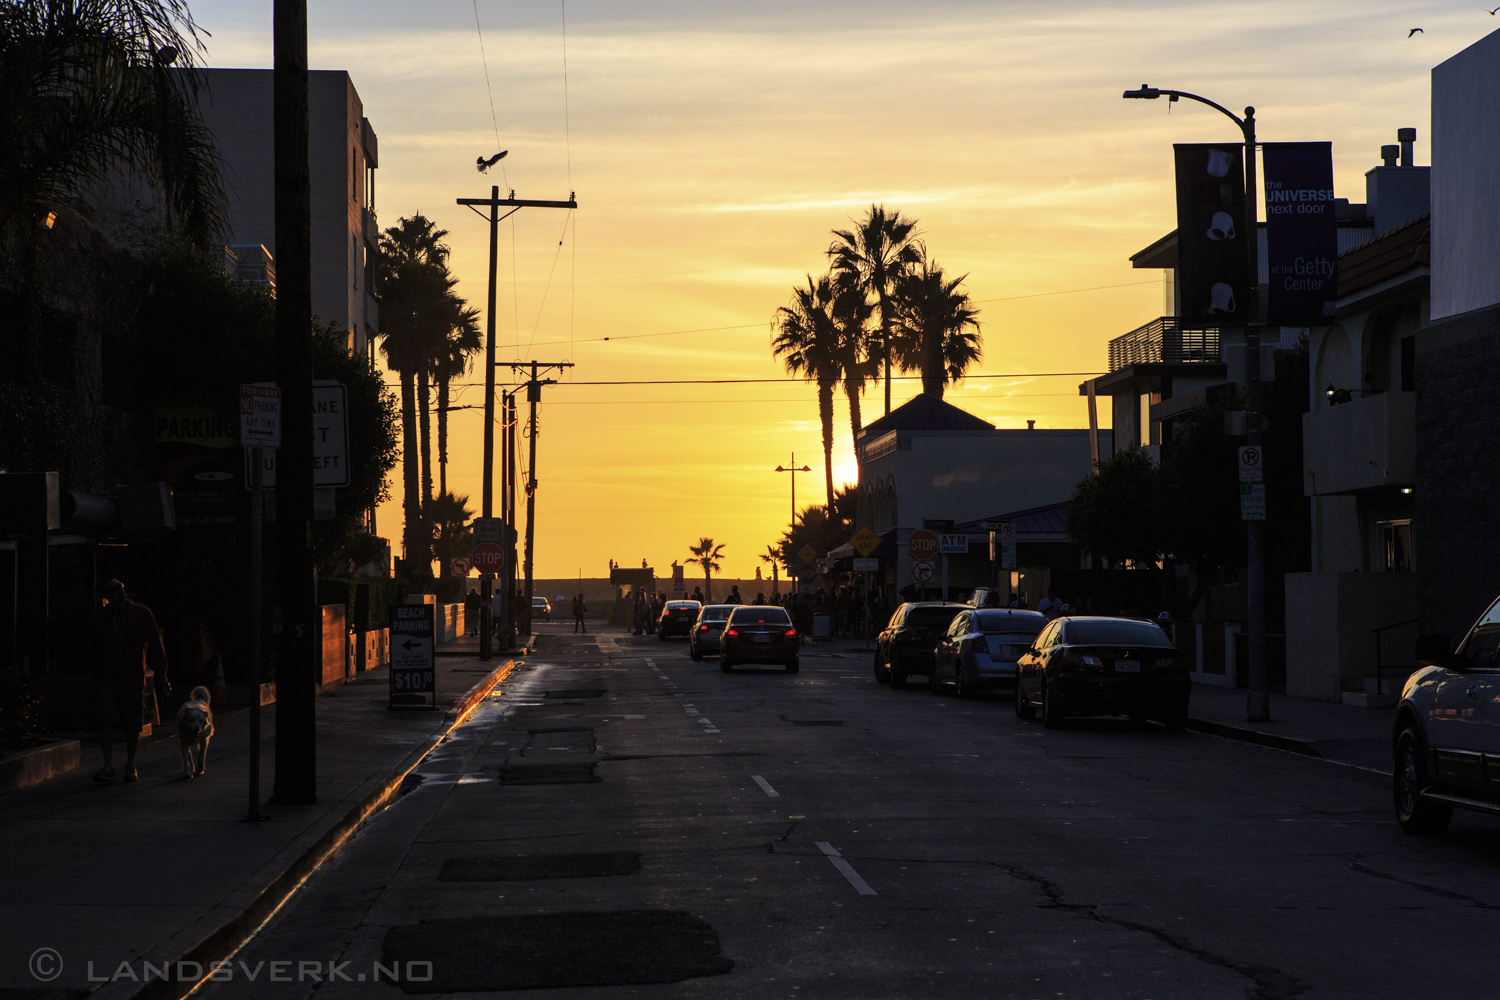 Venice Beach, Los Angeles, California.

(Canon EOS 5D Mark III / Canon EF 24-70mm f/2.8 L USM)